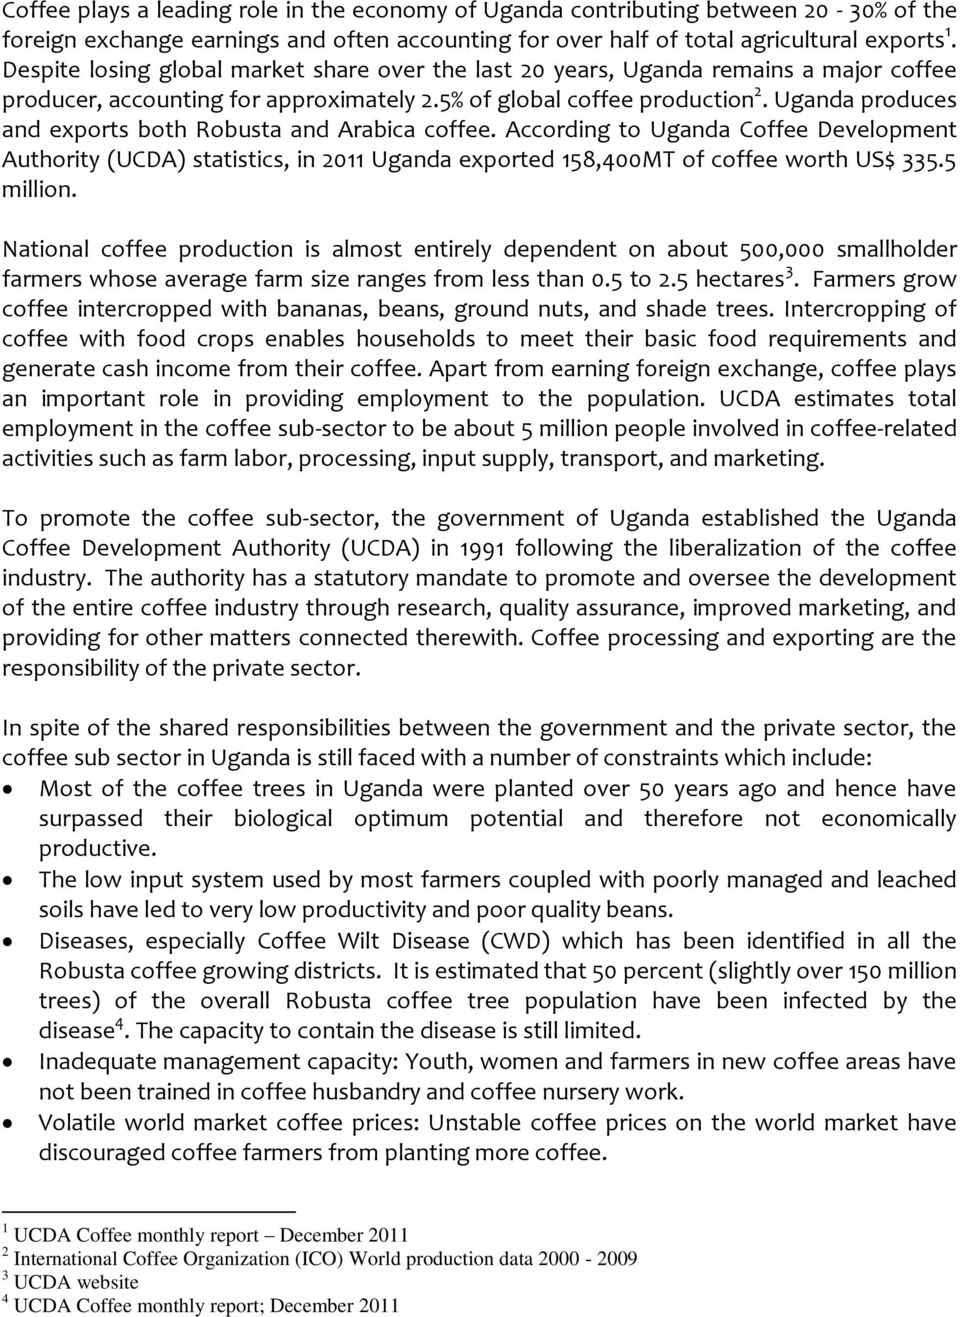 Uganda produces and exports both Robusta and Arabica coffee. According to Uganda Coffee Development Authority (UCDA) statistics, in 2011 Uganda exported 158,400MT of coffee worth US$ 335.5 million.